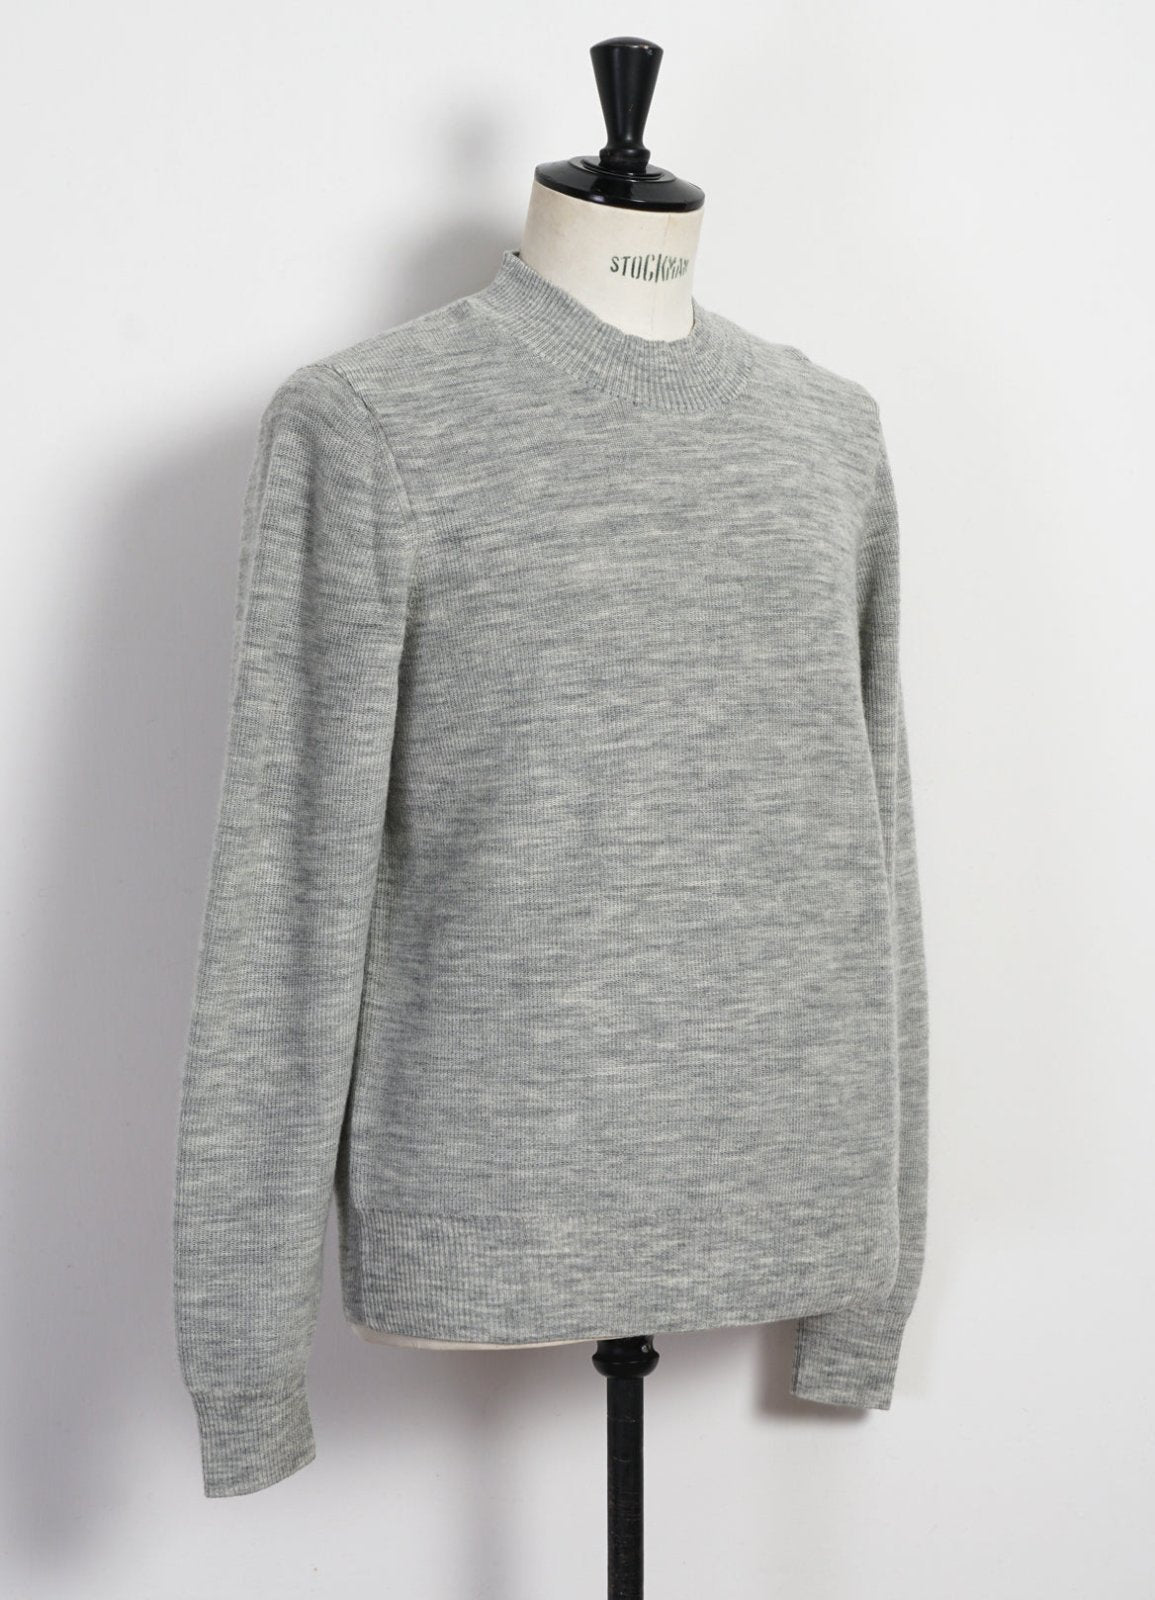 HANSEN GARMENTS - ANDRE | Knitted Crew Neck Sweater | Winter Grey - HANSEN Garments